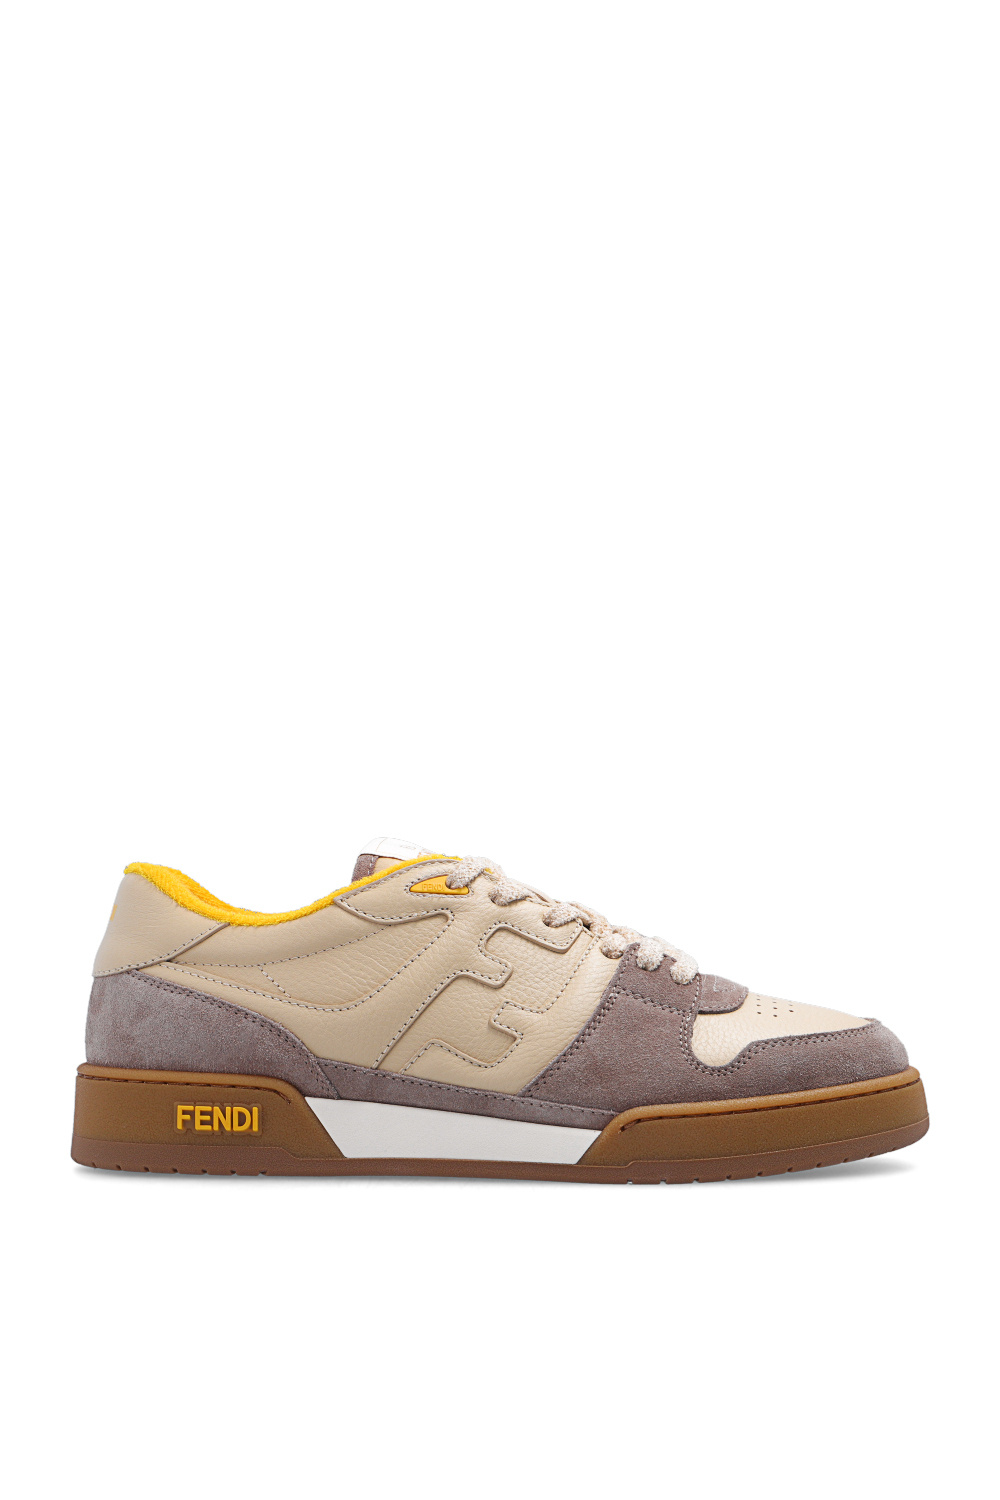 ‘Fendi Match’ sneakers Fendi - Vitkac HK